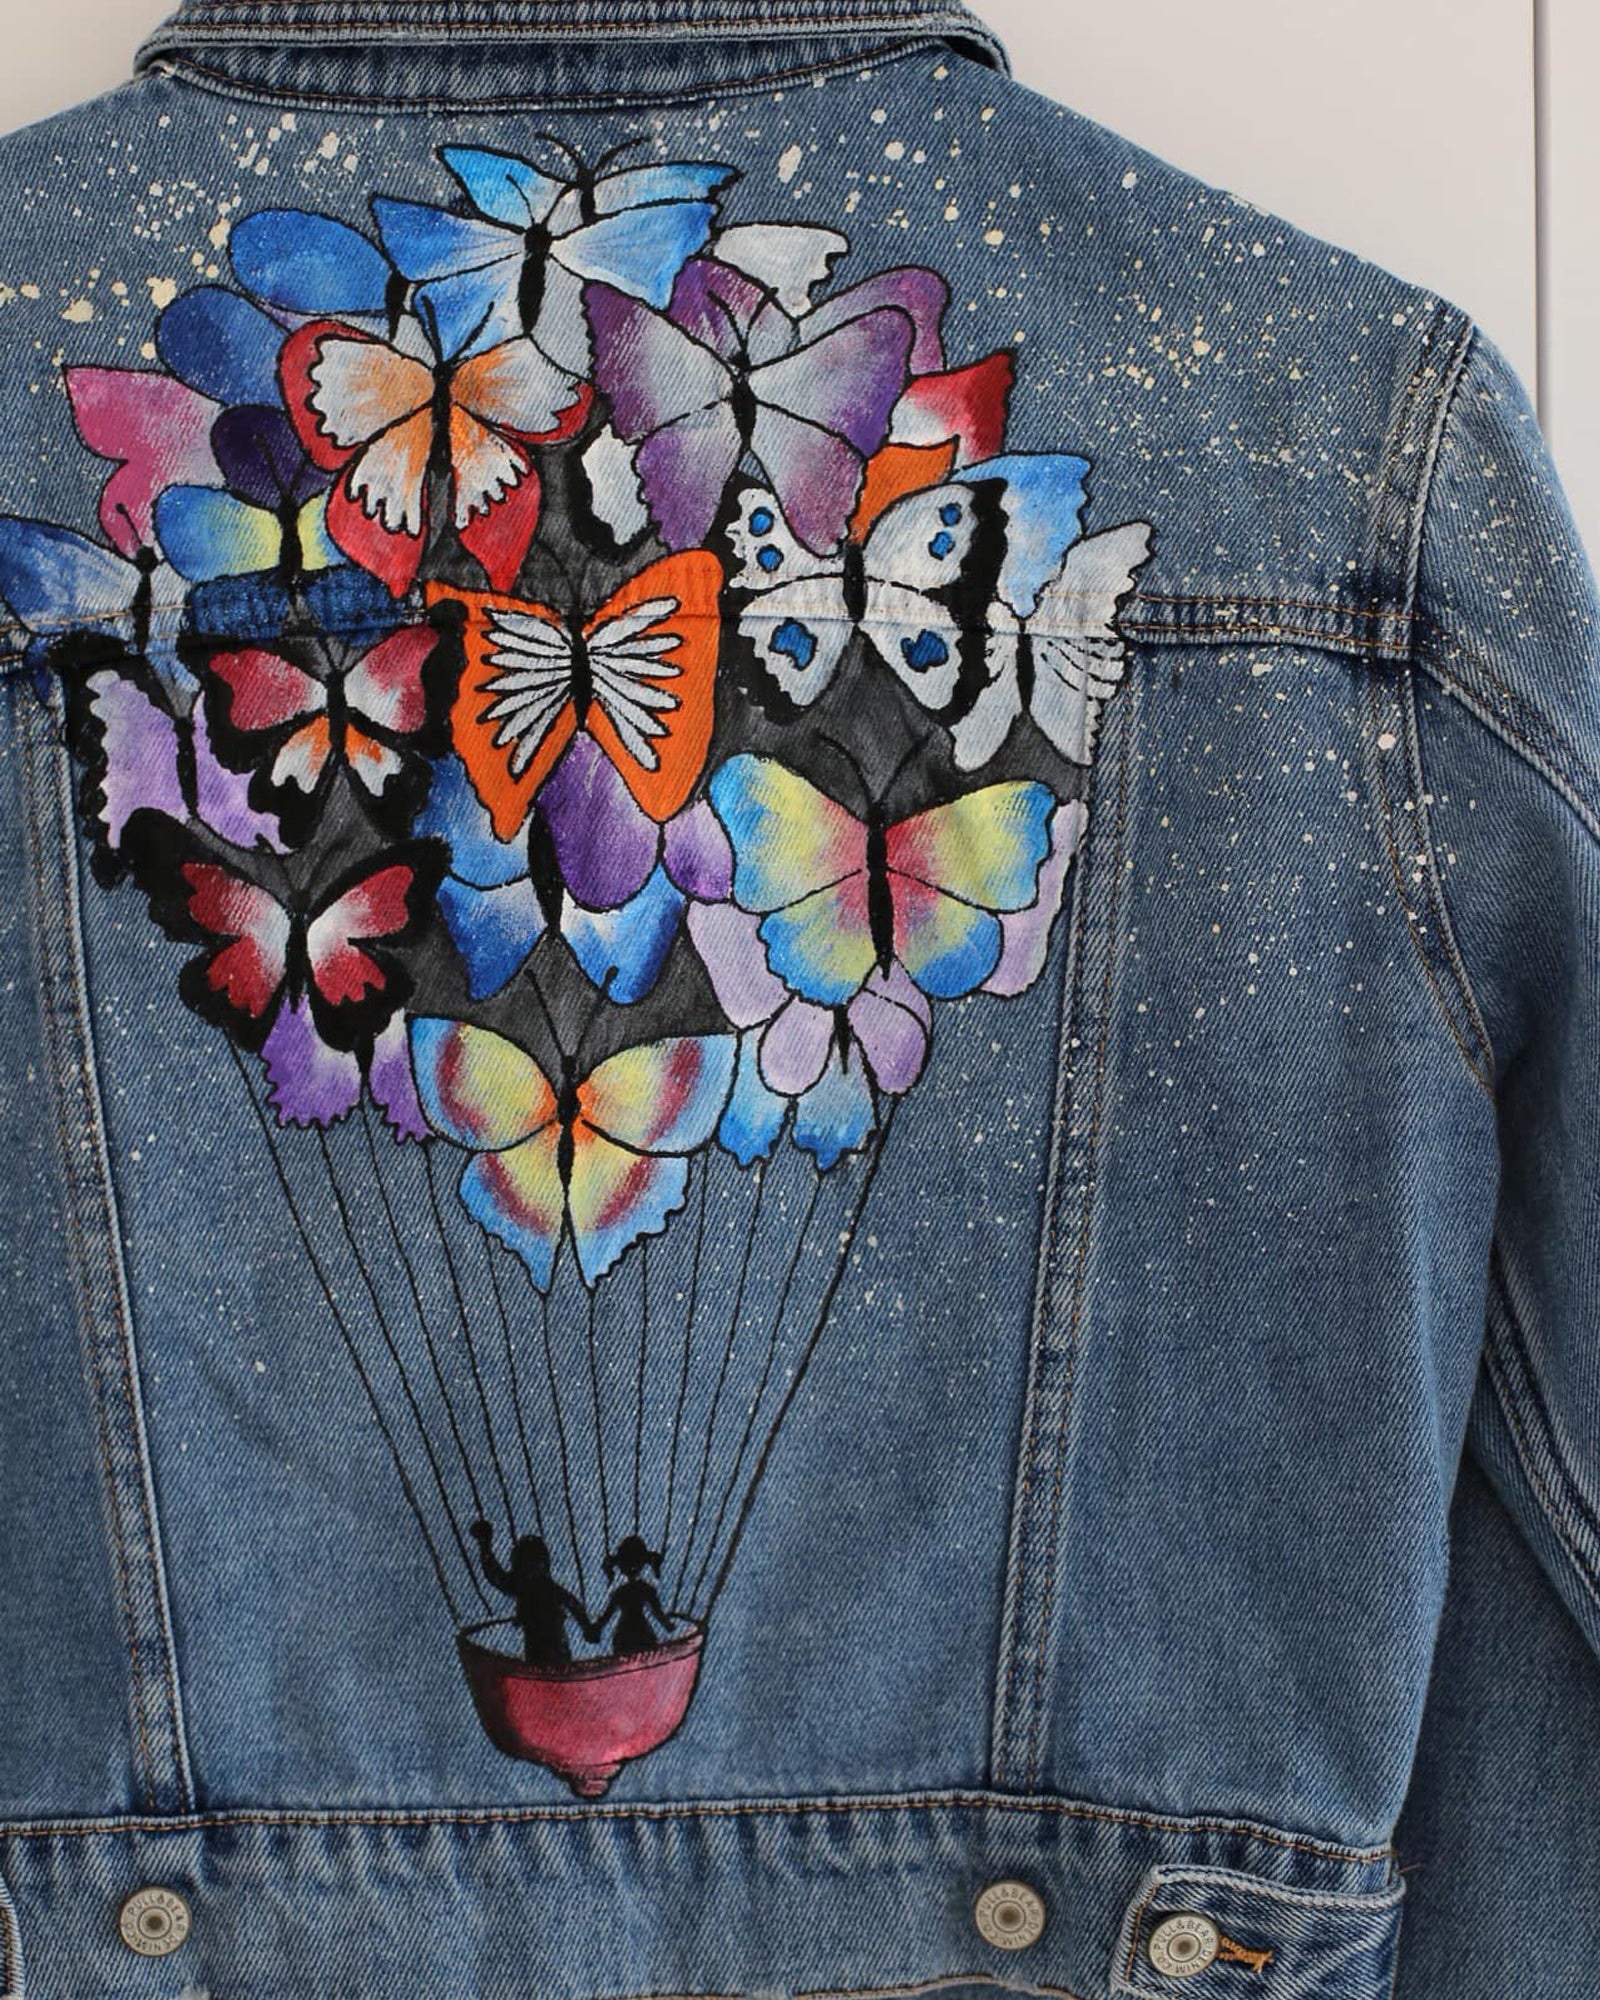 "Butterfly balloon" denim jacket